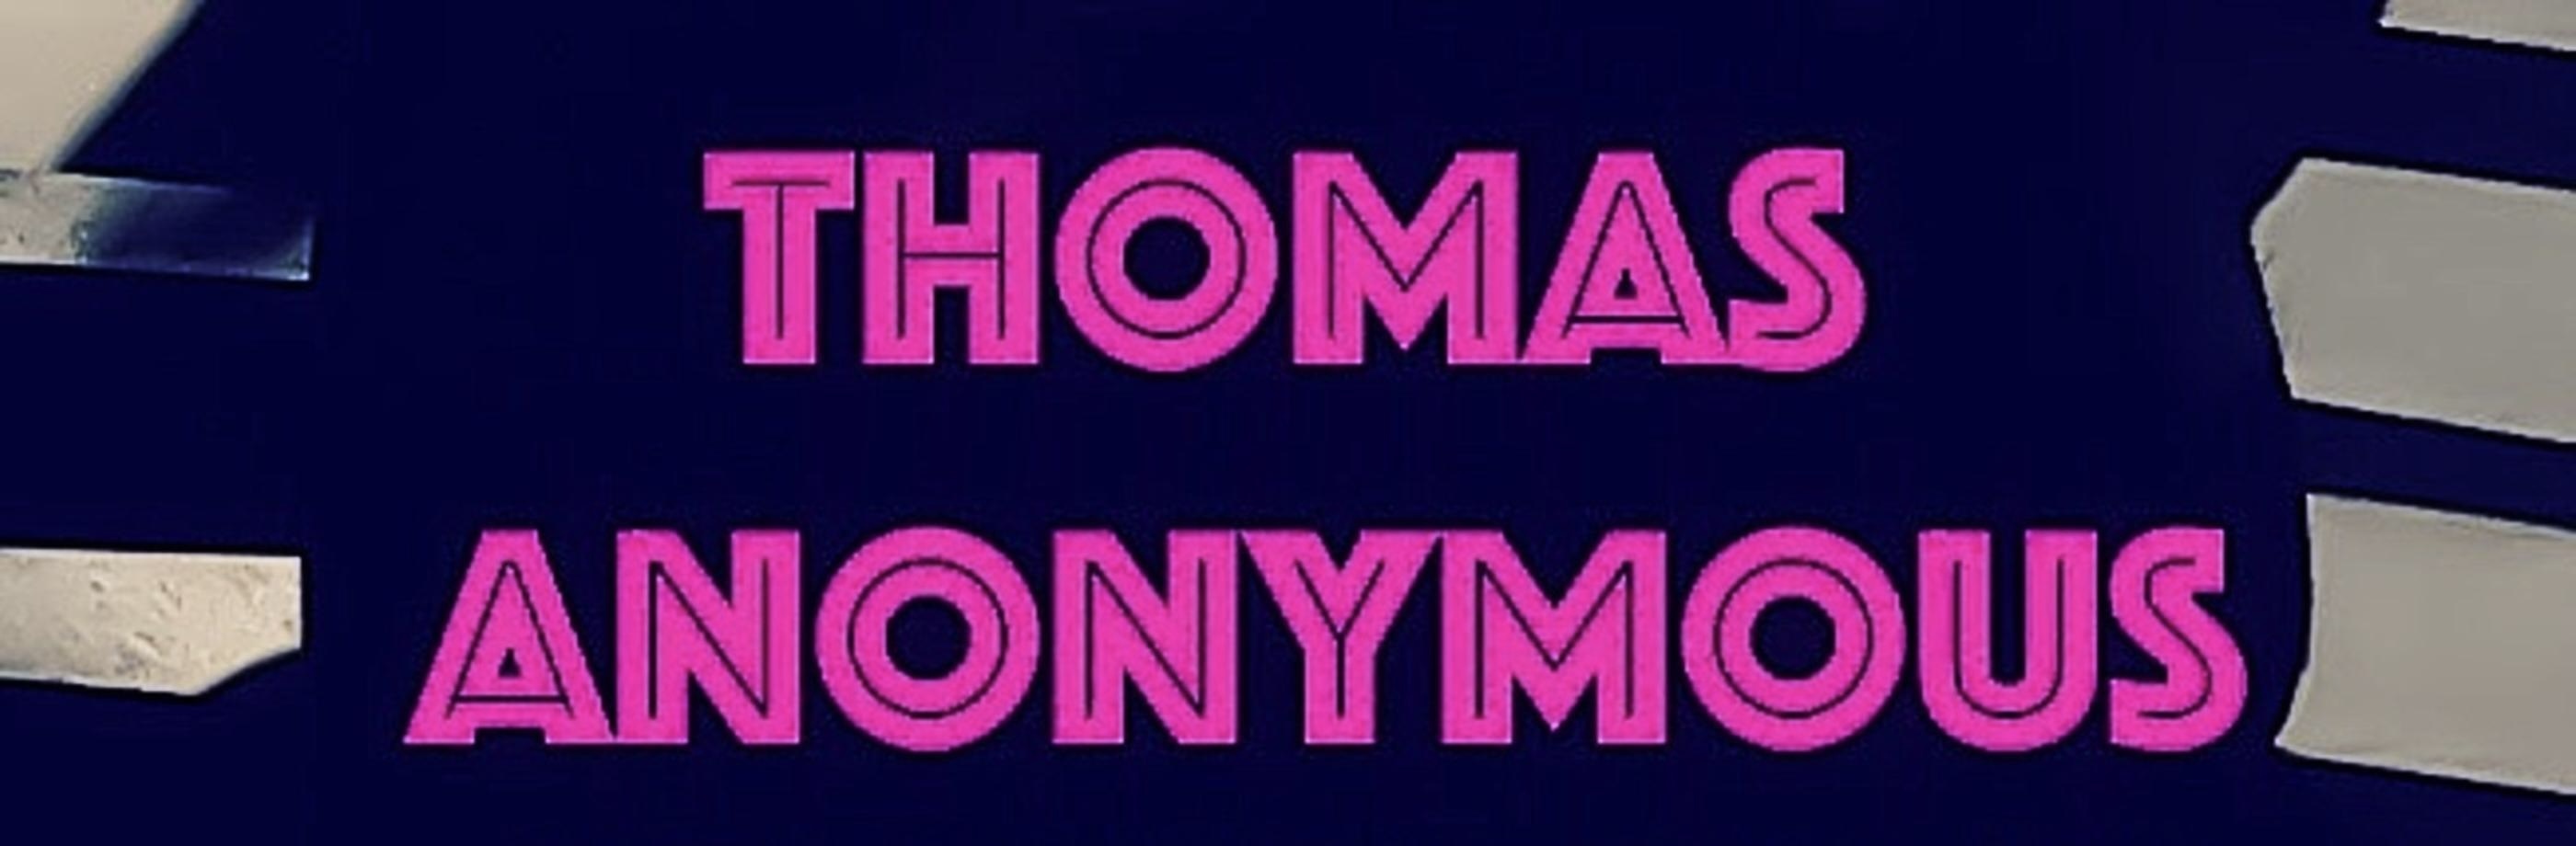 The Thomas Anonymous Show